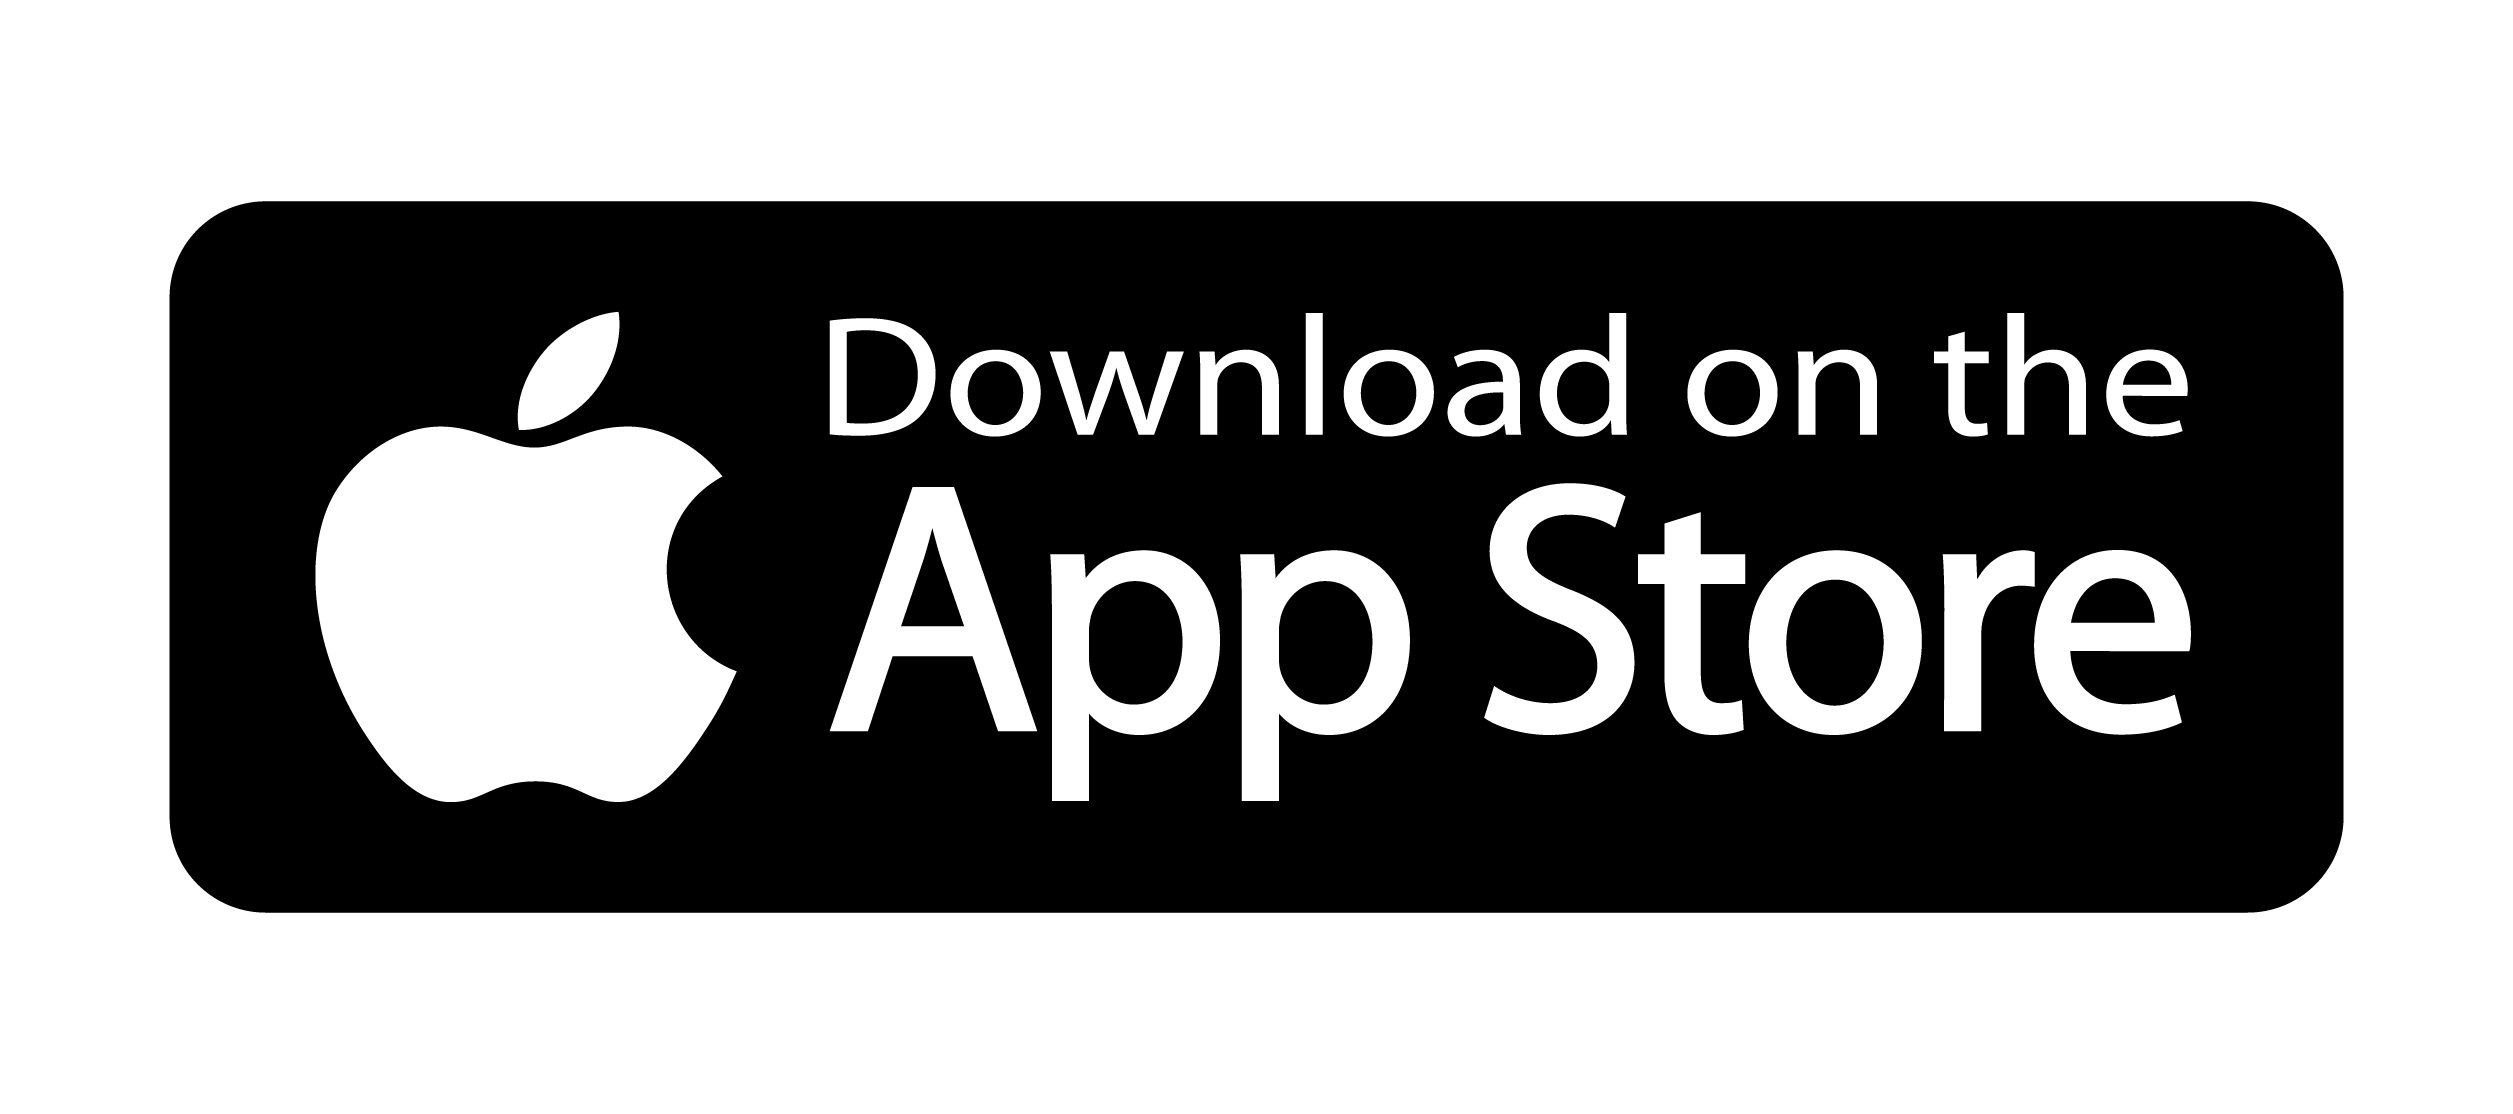 App store 5. Доступно в app Store. Гугл плей и апп стор. Доступно в Apple Store. Загрузите в app Store.